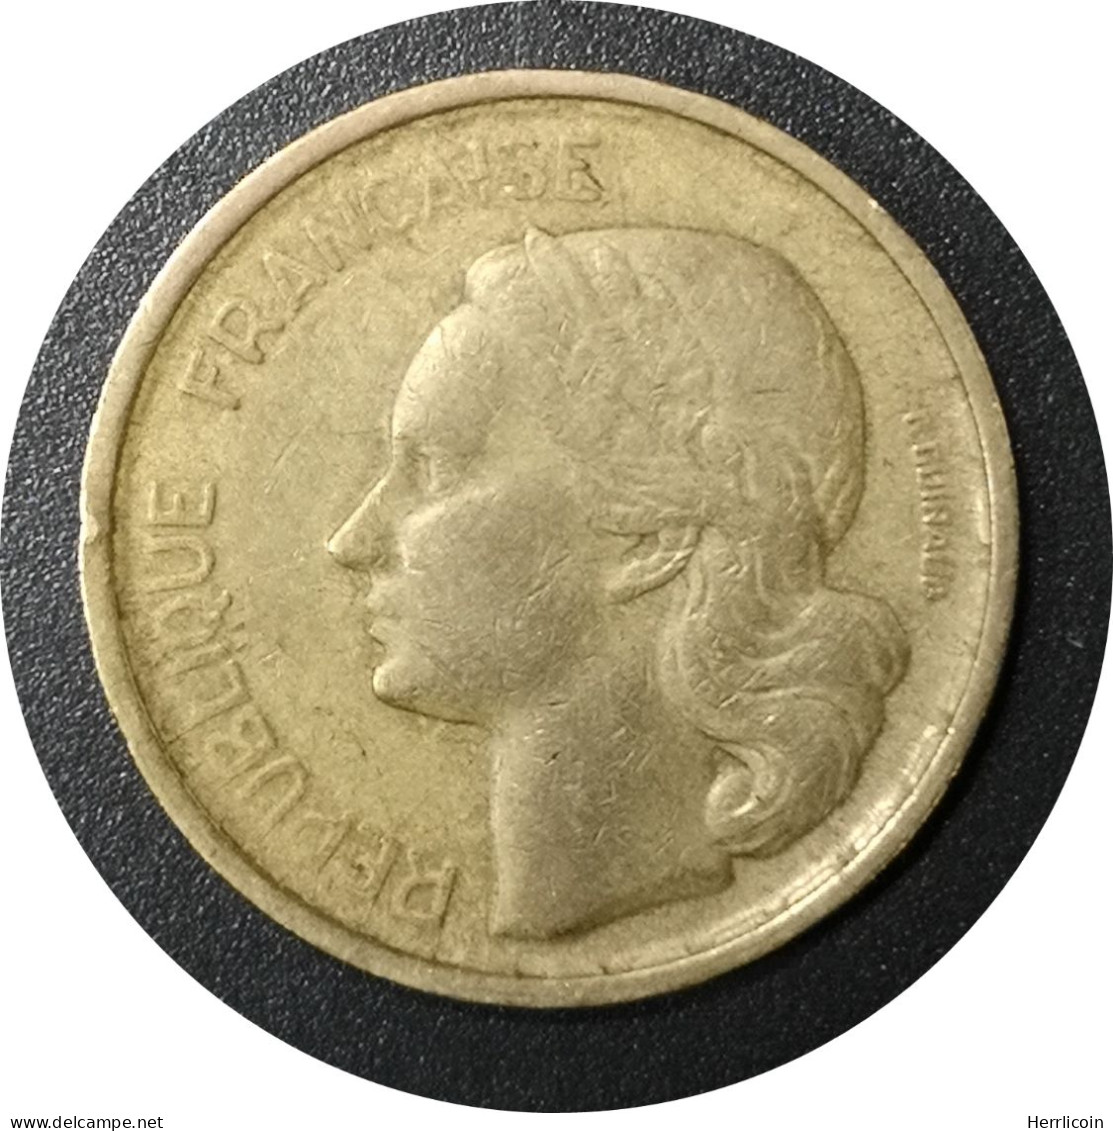 Monnaie France - 1951 "B" - 10 Francs Guiraud - 10 Francs